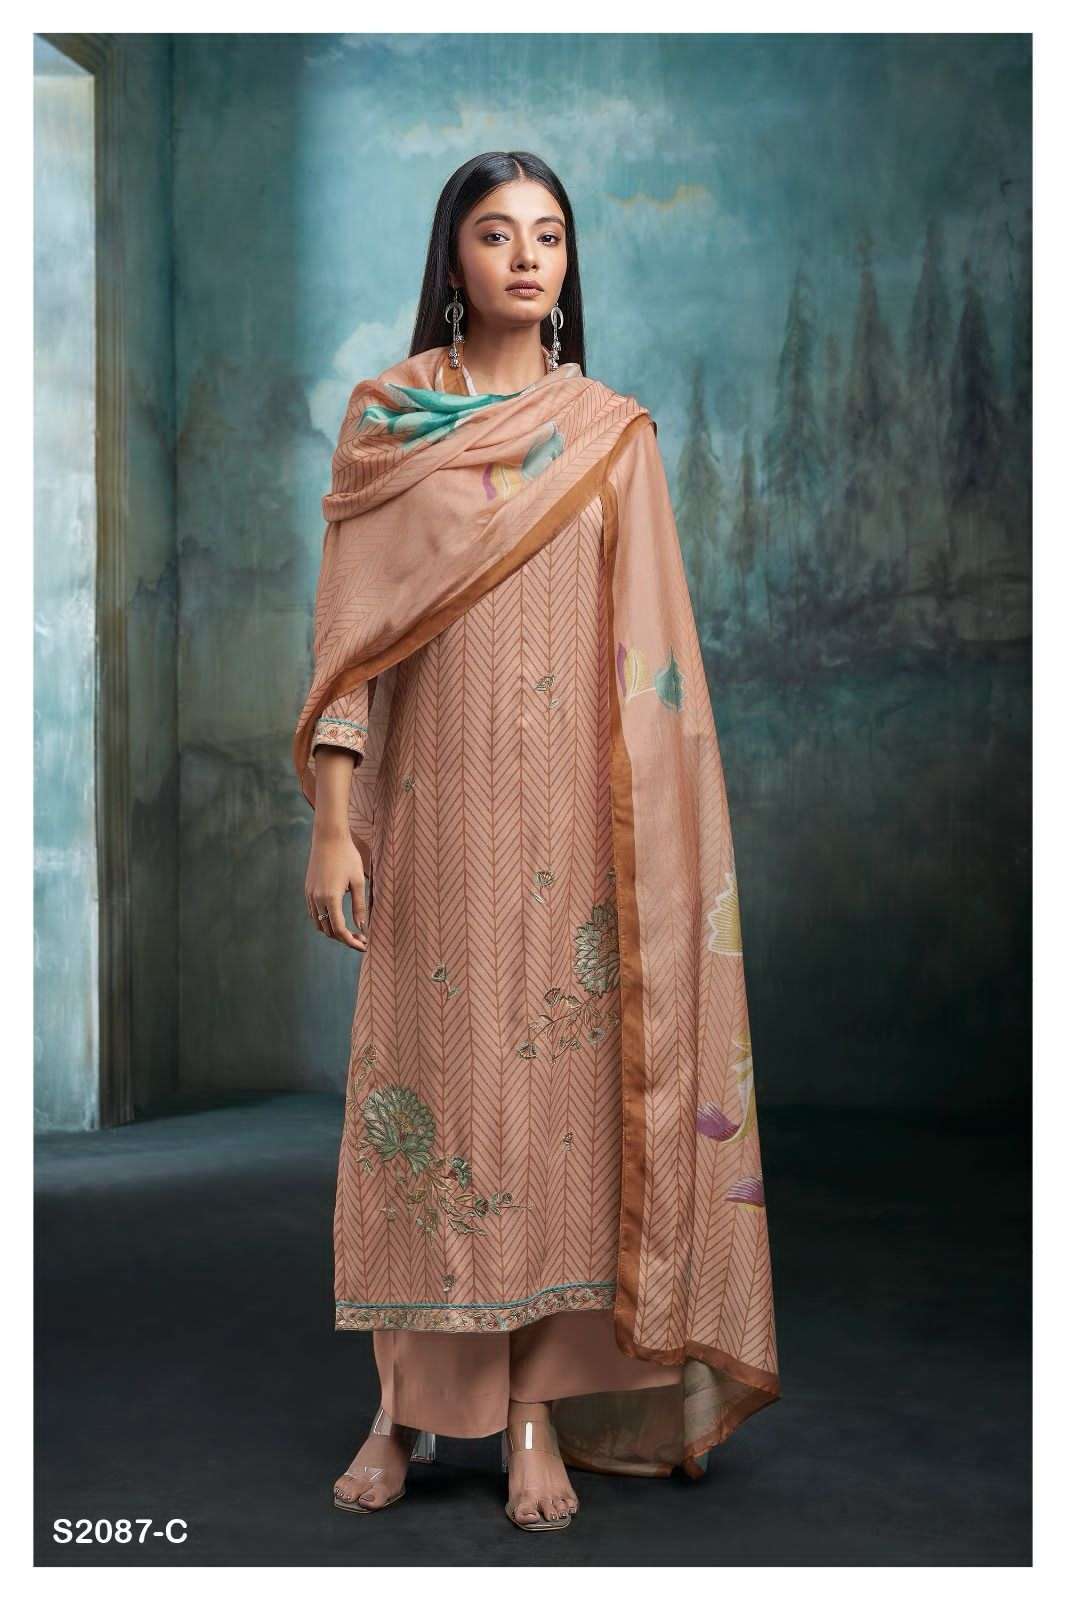 ganga myley 2087 colour series designer wedding wear salwar kameez wholesaler surat gujarat